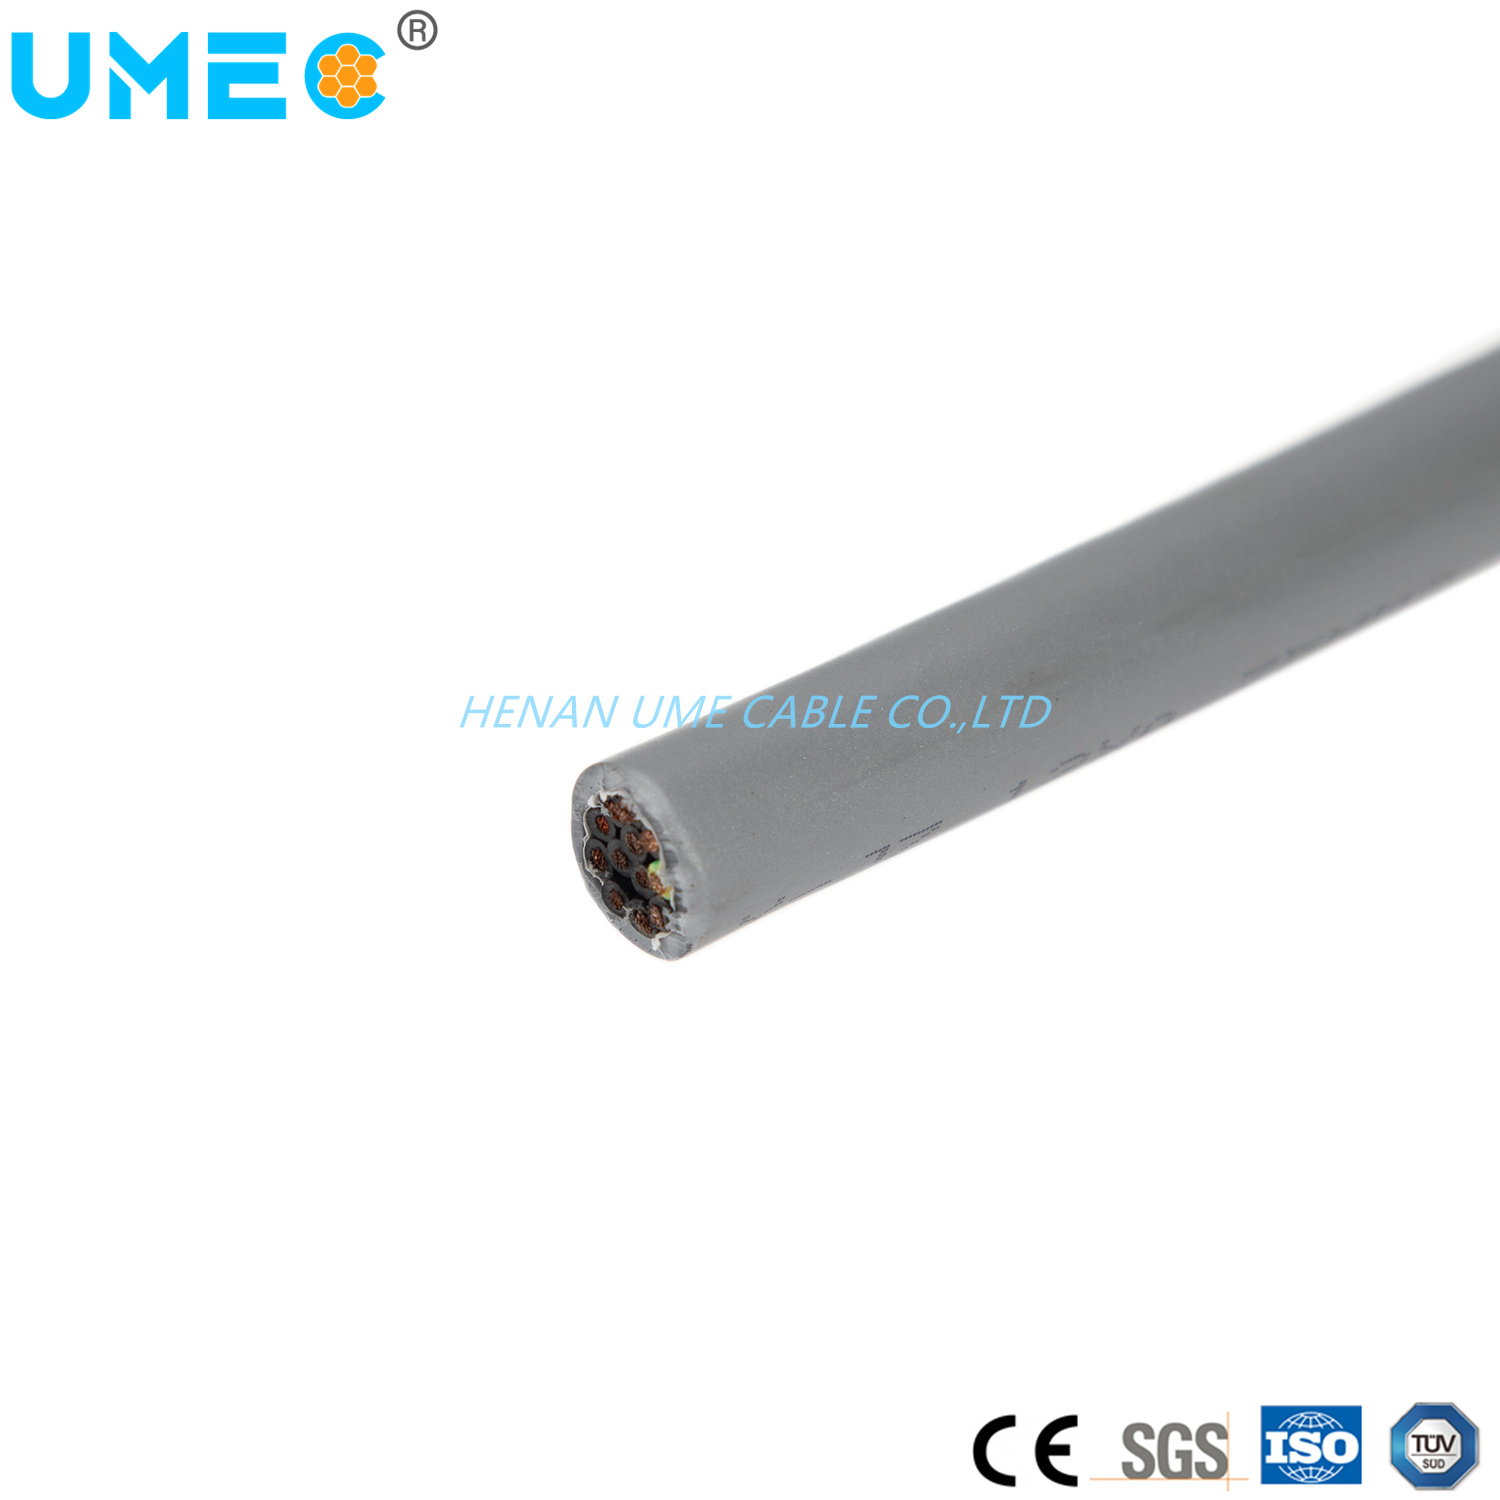 3 Core H07rn-F Cable 1.5/2.5/4mm2 Flexible Copper Rubber Cable